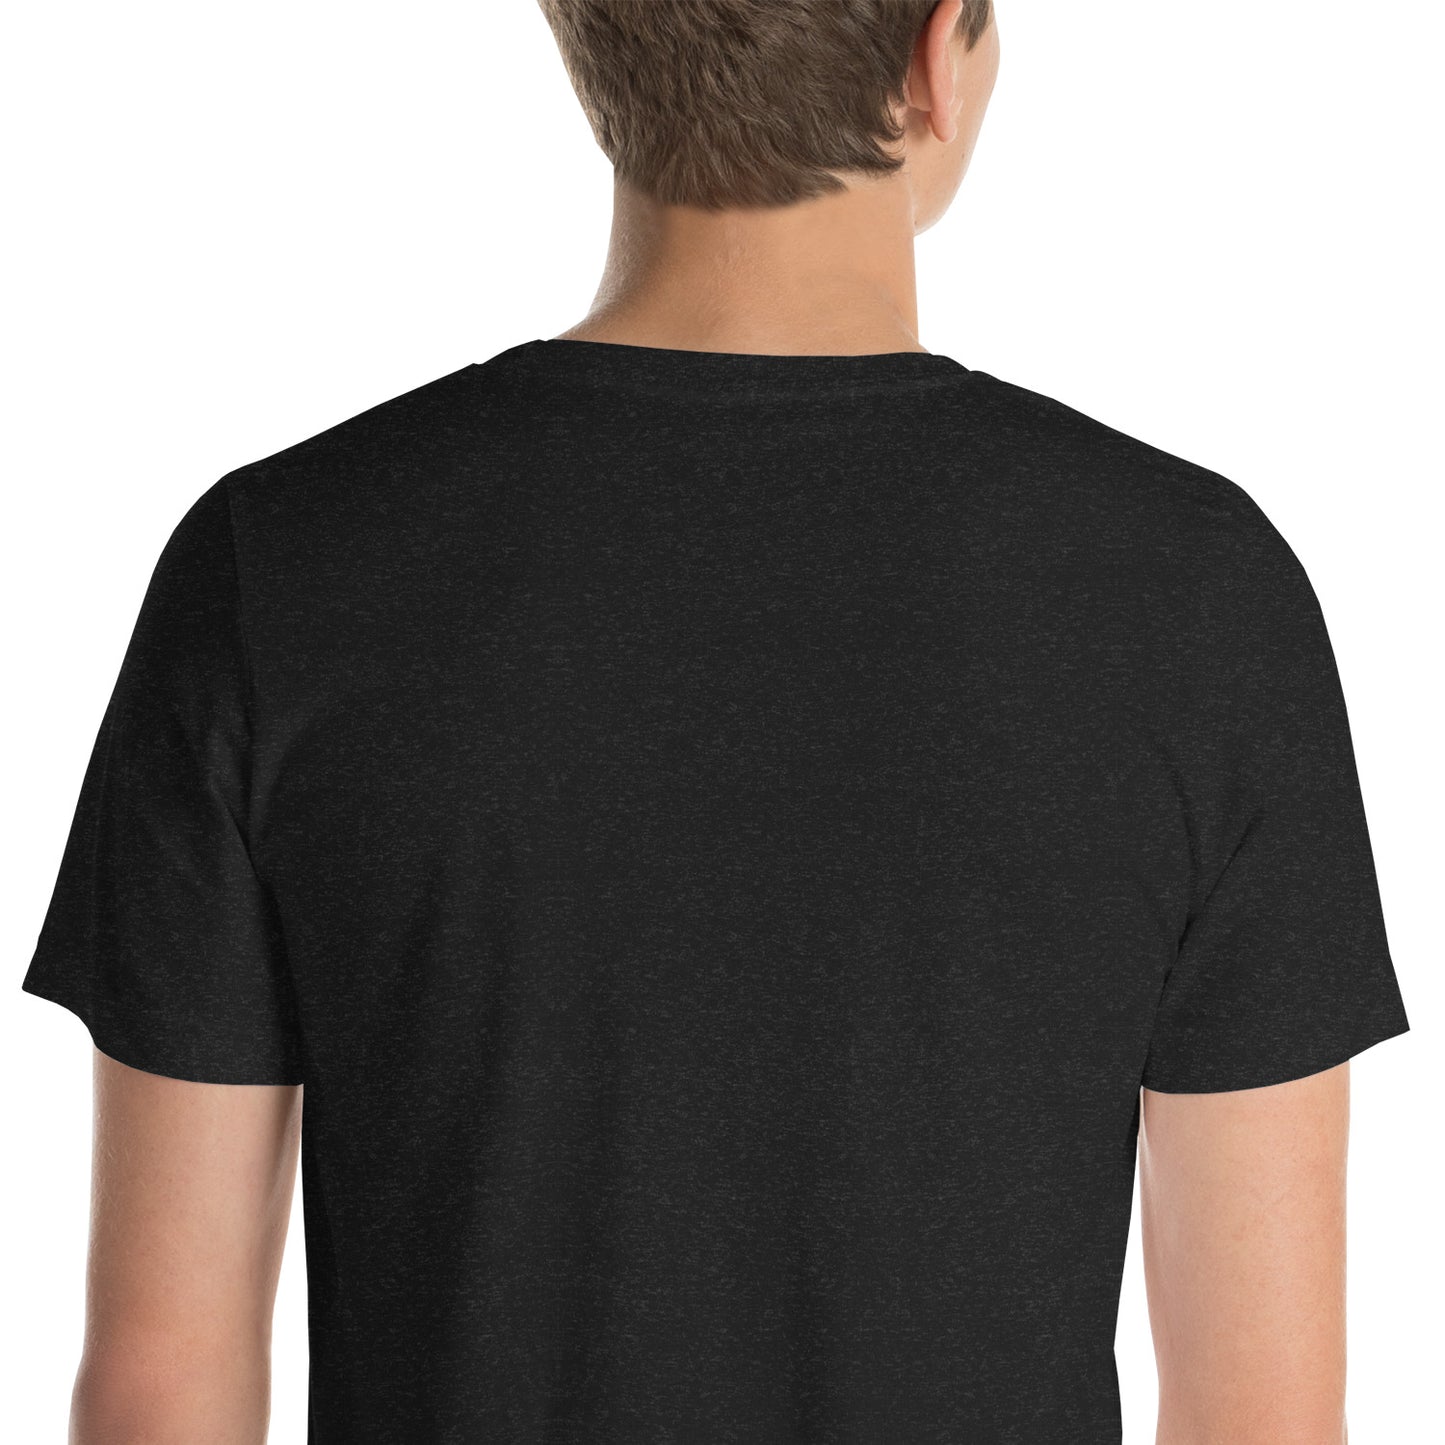  Unisex T-Shirt - Black Heather - Back view of t-shirt on man - yellow Byron Bay Surf Club logo on front - Genuine Byron Bay Merchandise | Produced by Go Sea Kayak Byron Bay 